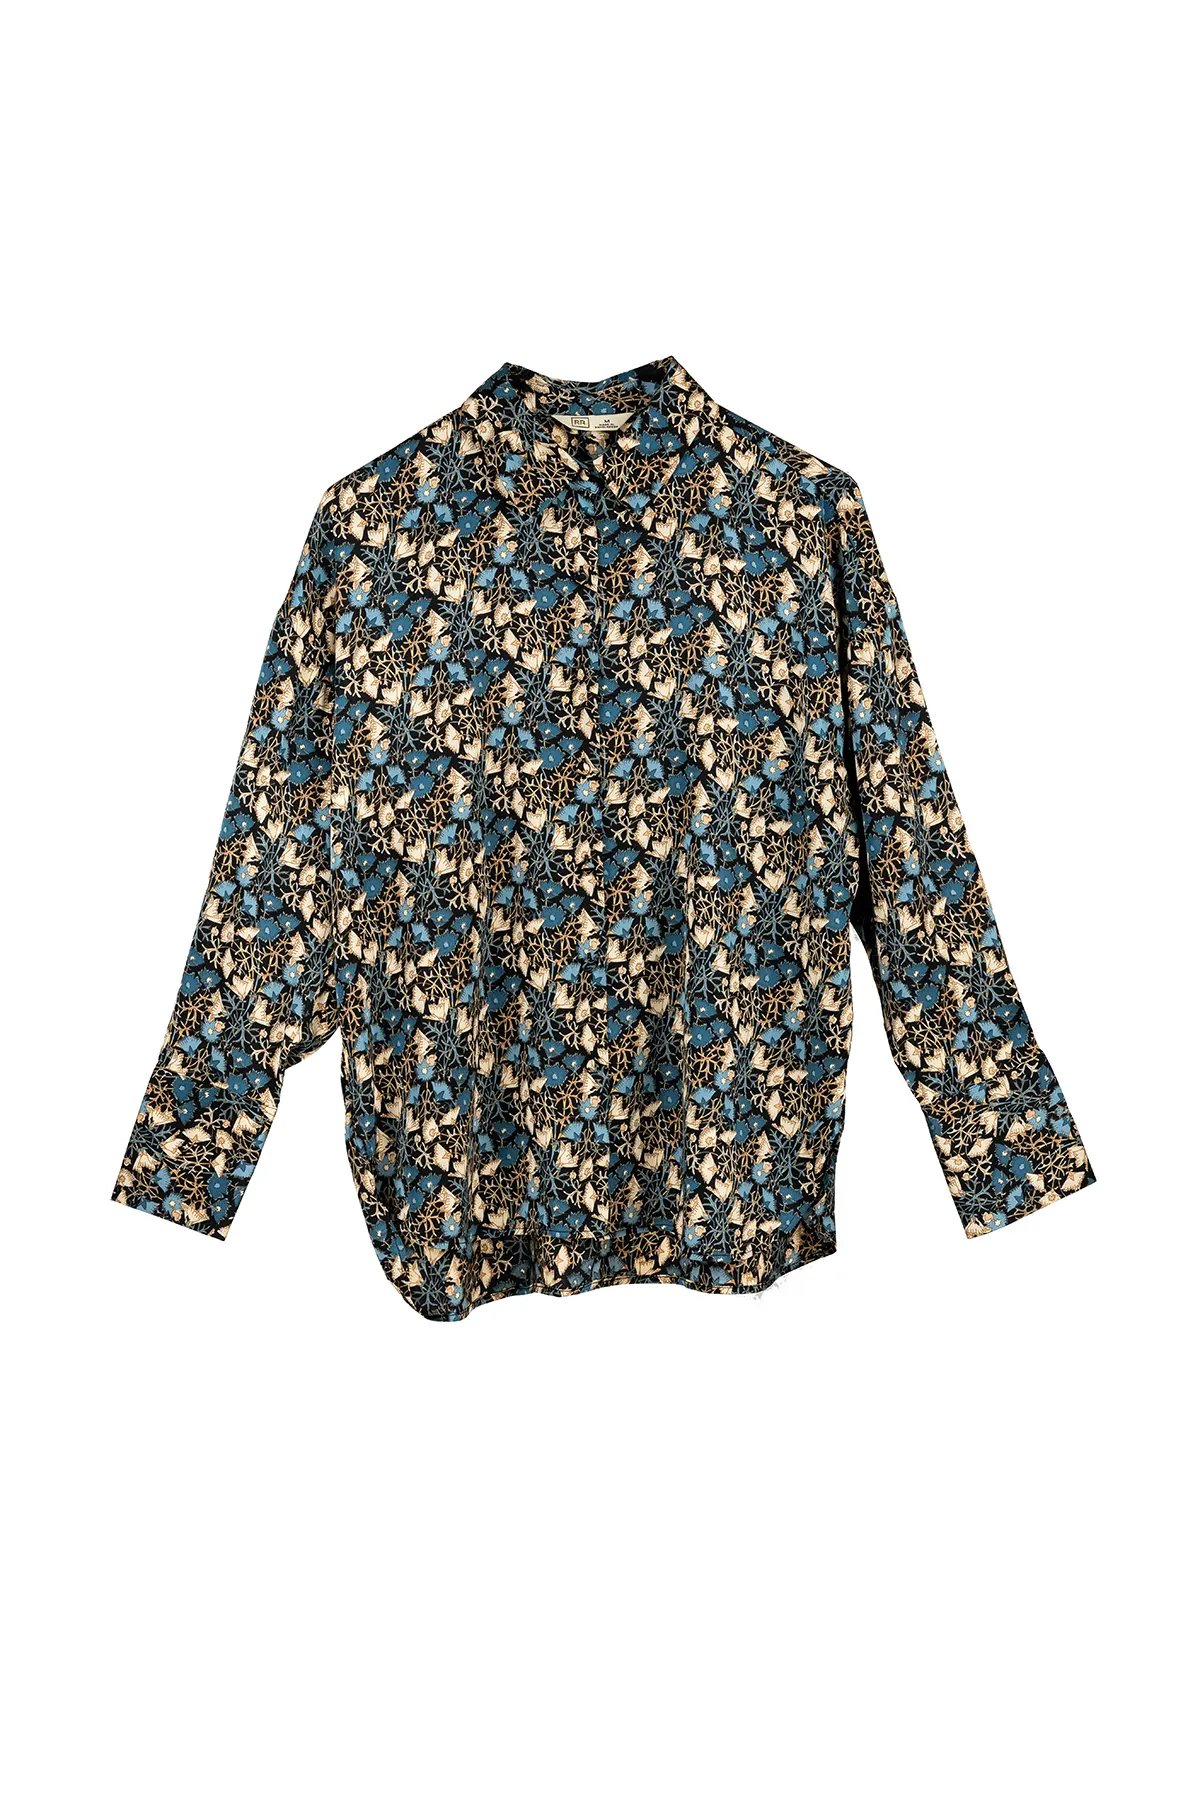 Floral print Shirt - Peacock Blue (AOP)